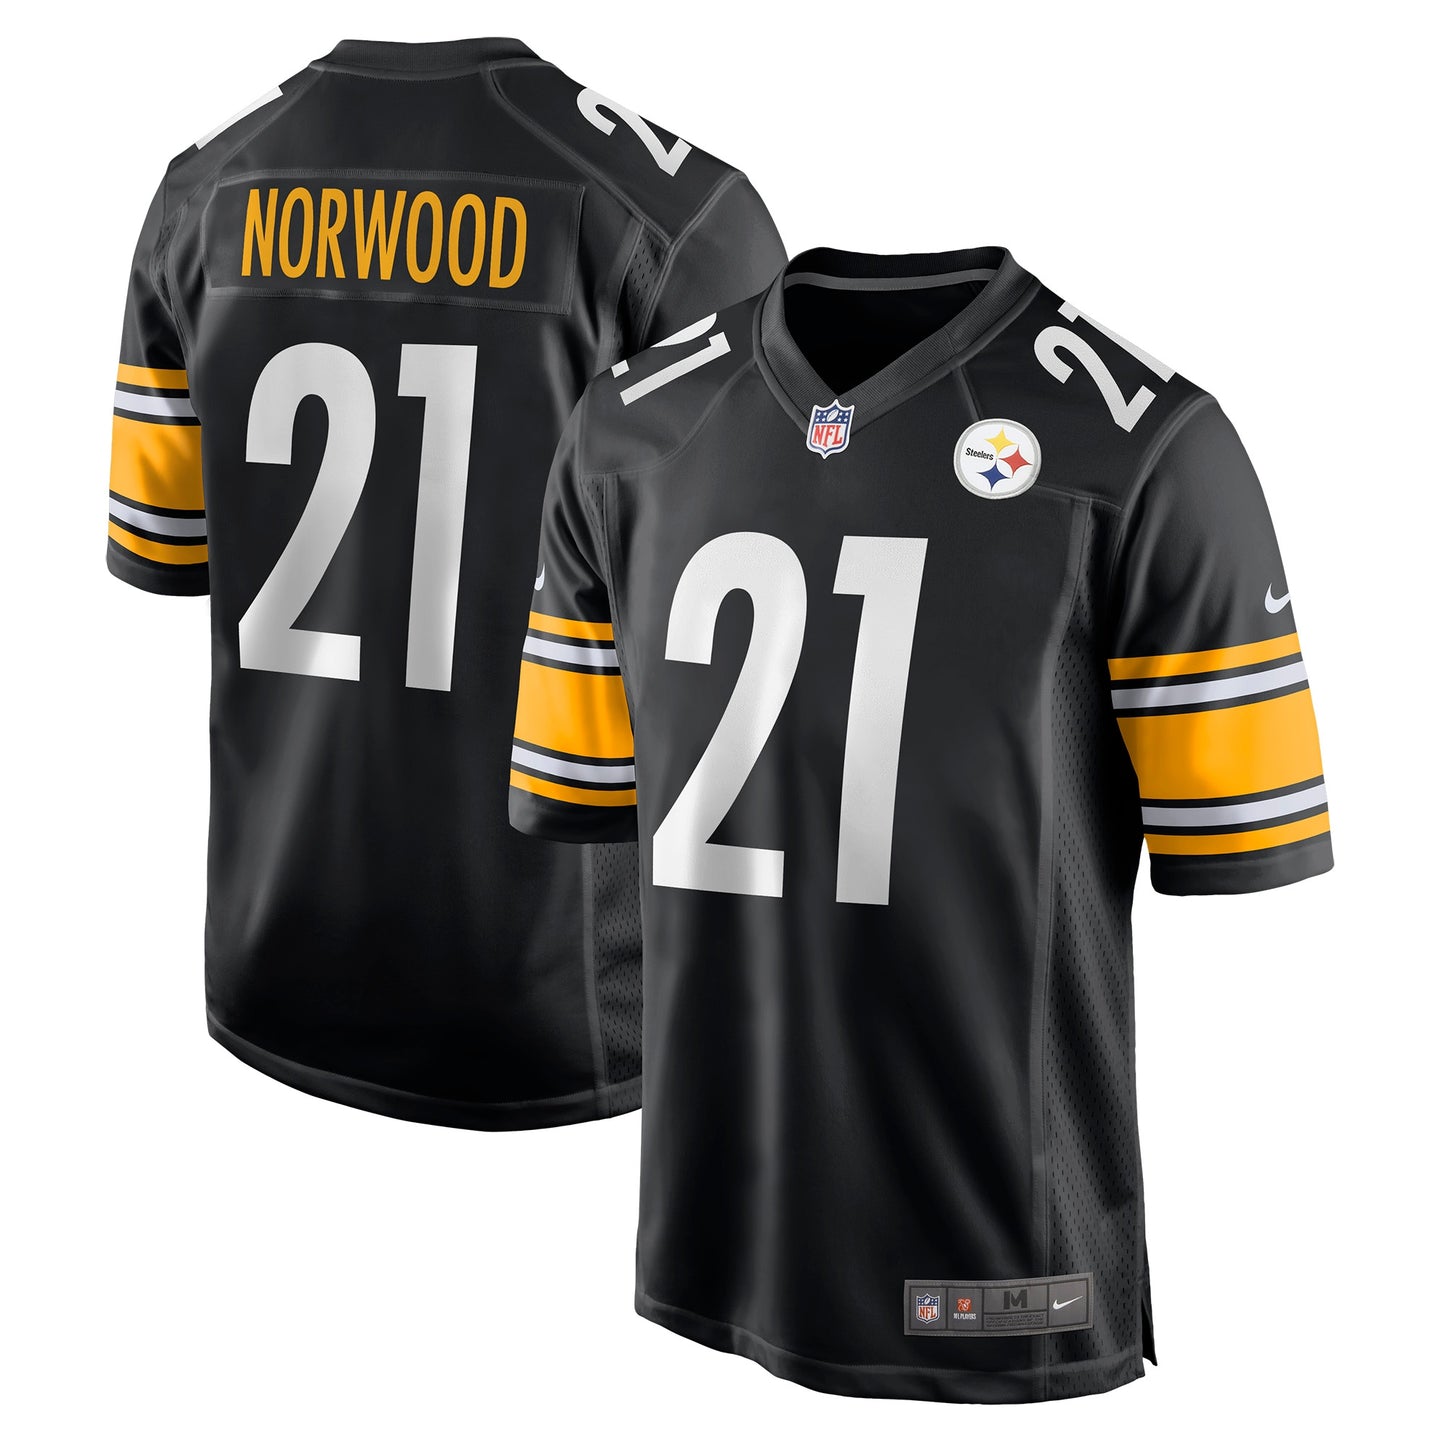 Tre Norwood Pittsburgh Steelers Nike Game Jersey - Black